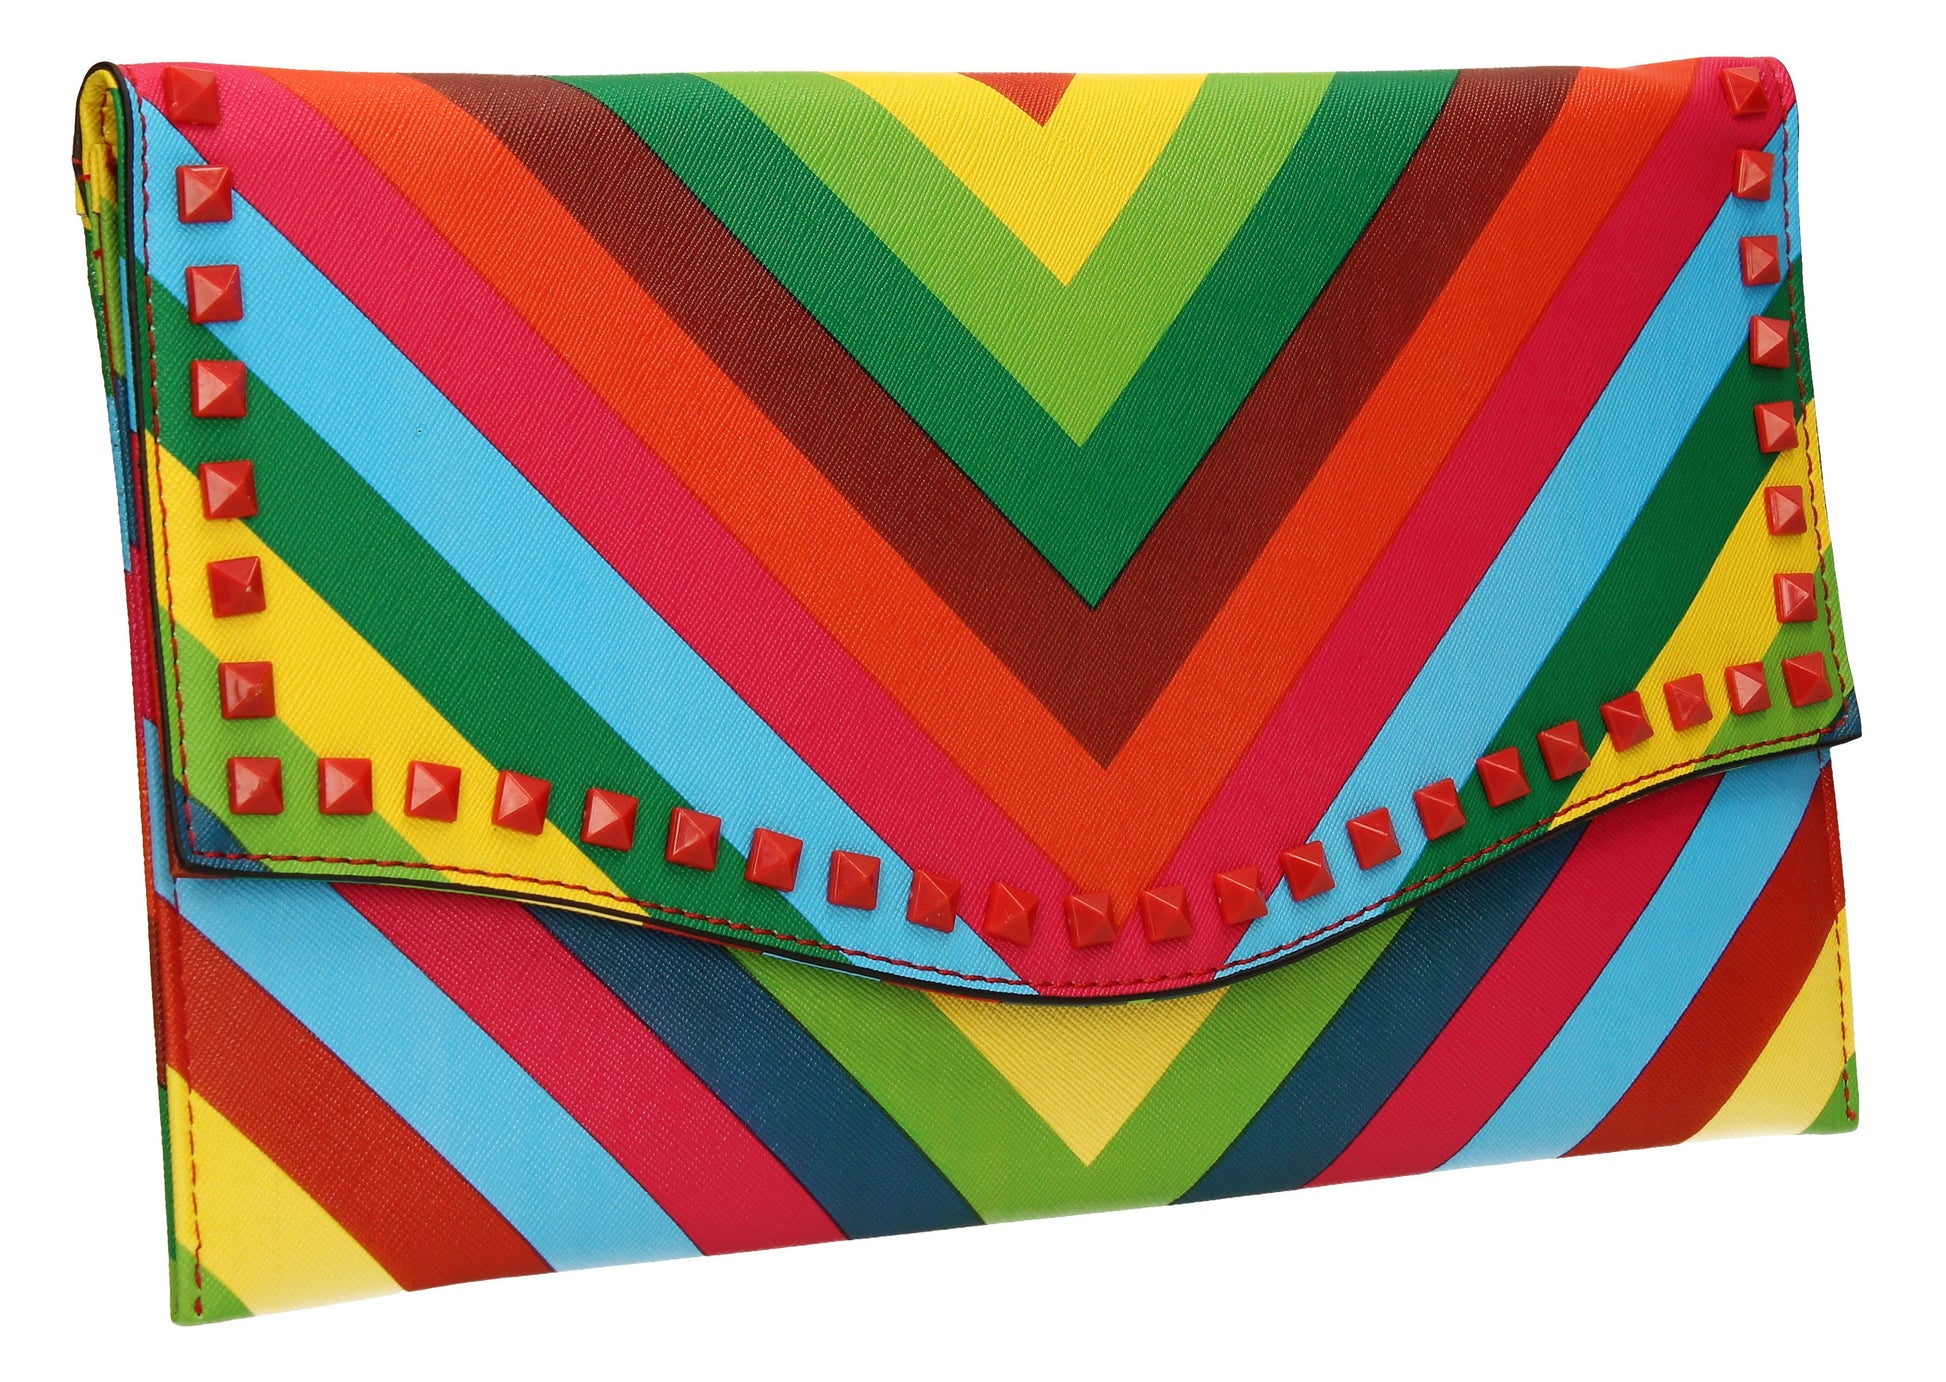 SWANKYSWANS Rainbow Clutch Bag Multicolour Cute Cheap Clutch Bag For Weddings School and Work